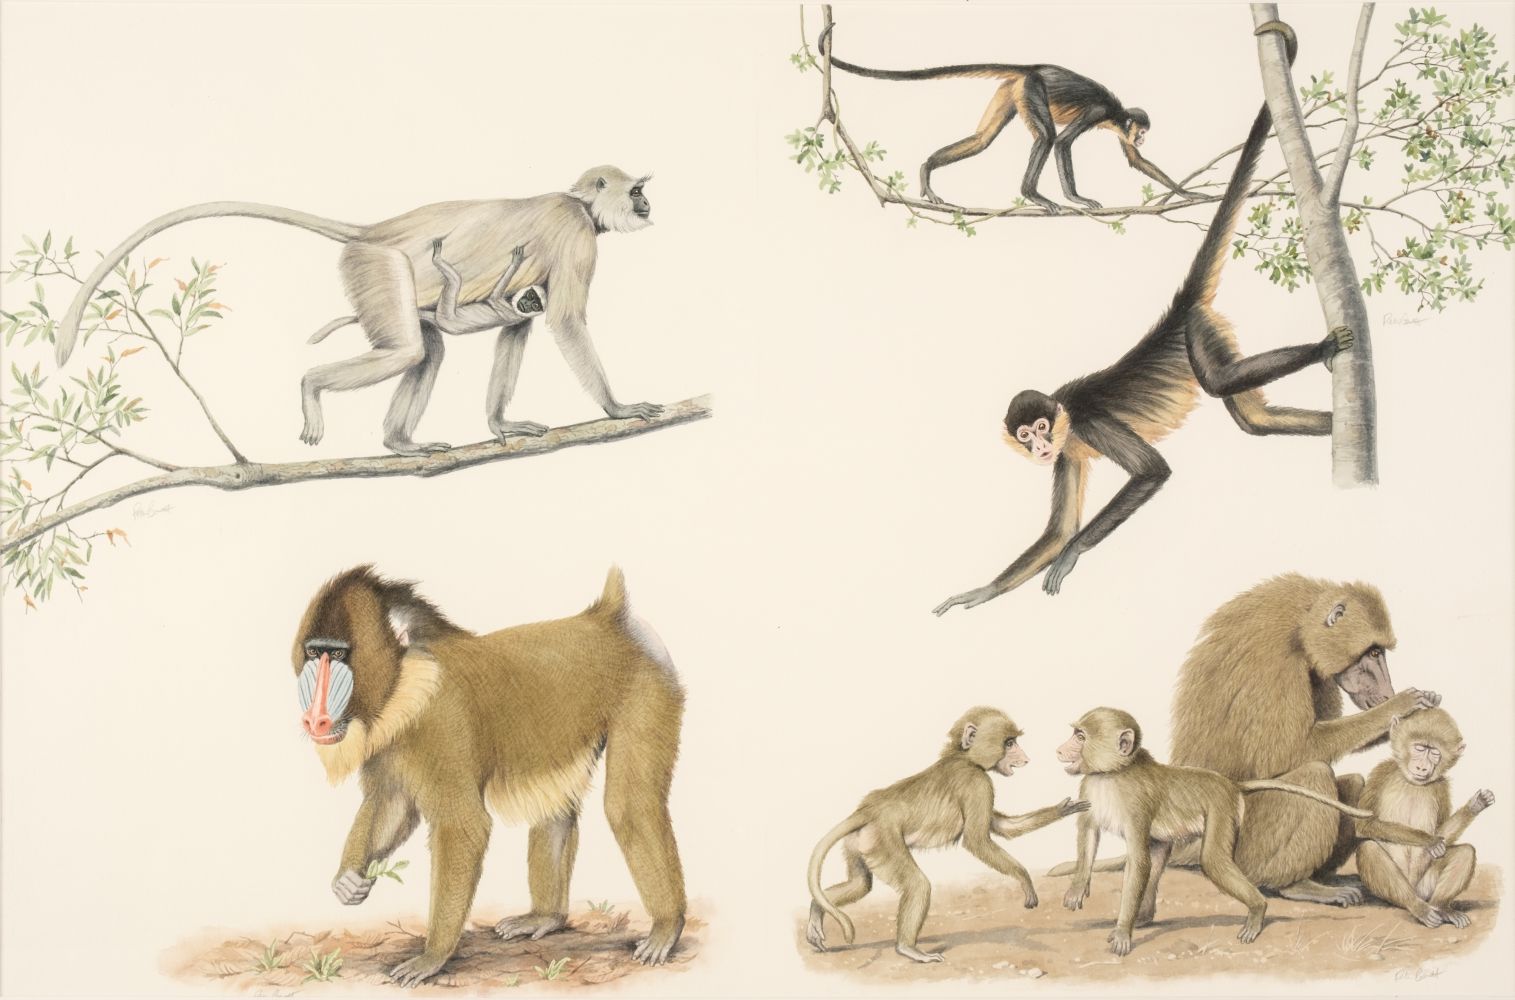 Barrett (Peter, 1935). Monkeys, watercolour, pen and ink,